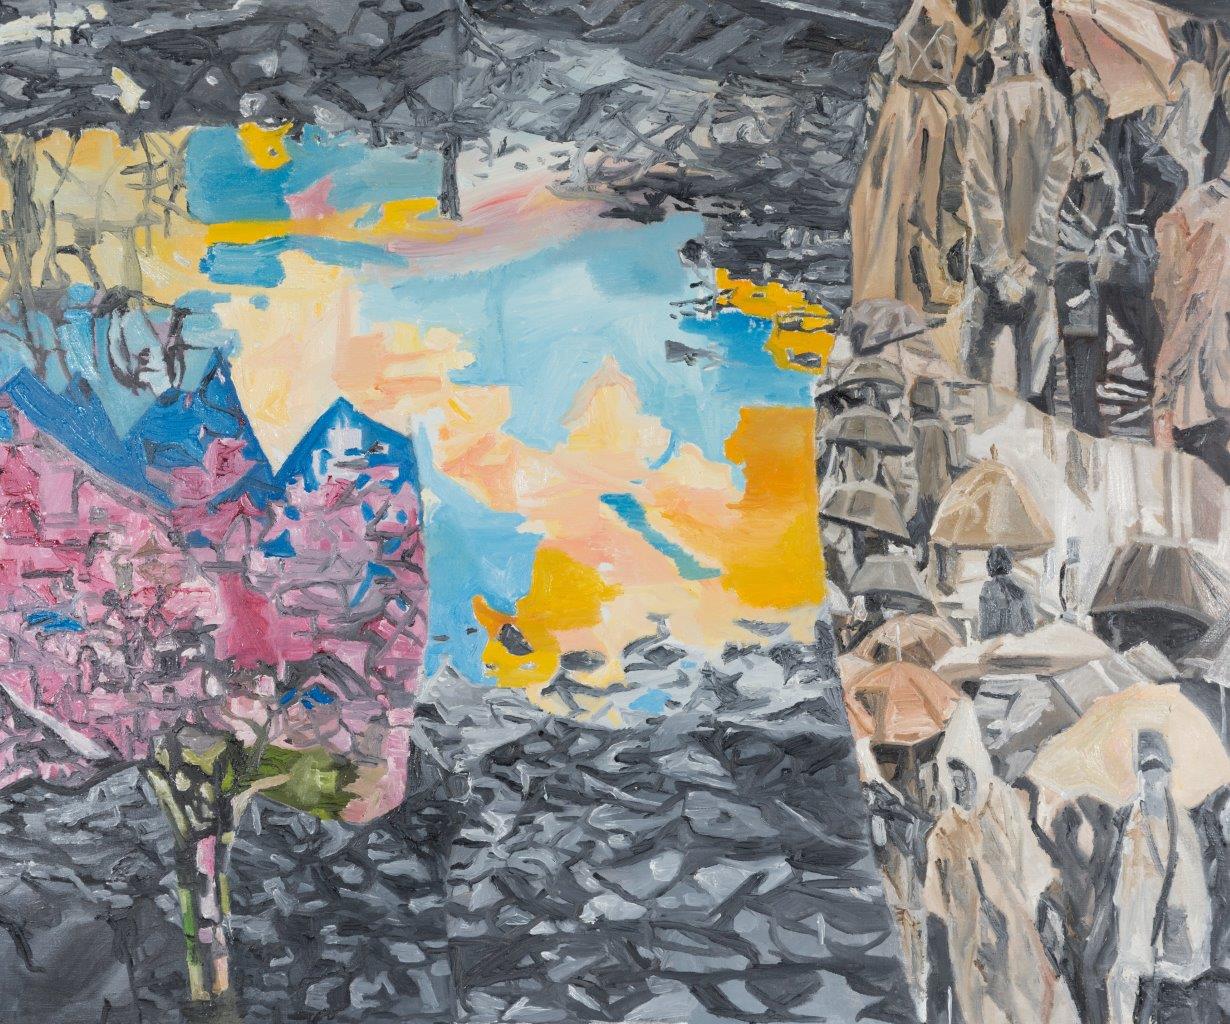 Jasmir Creed ‘Pool of Life’ 2018 oil on canvas 150 x 120 cm